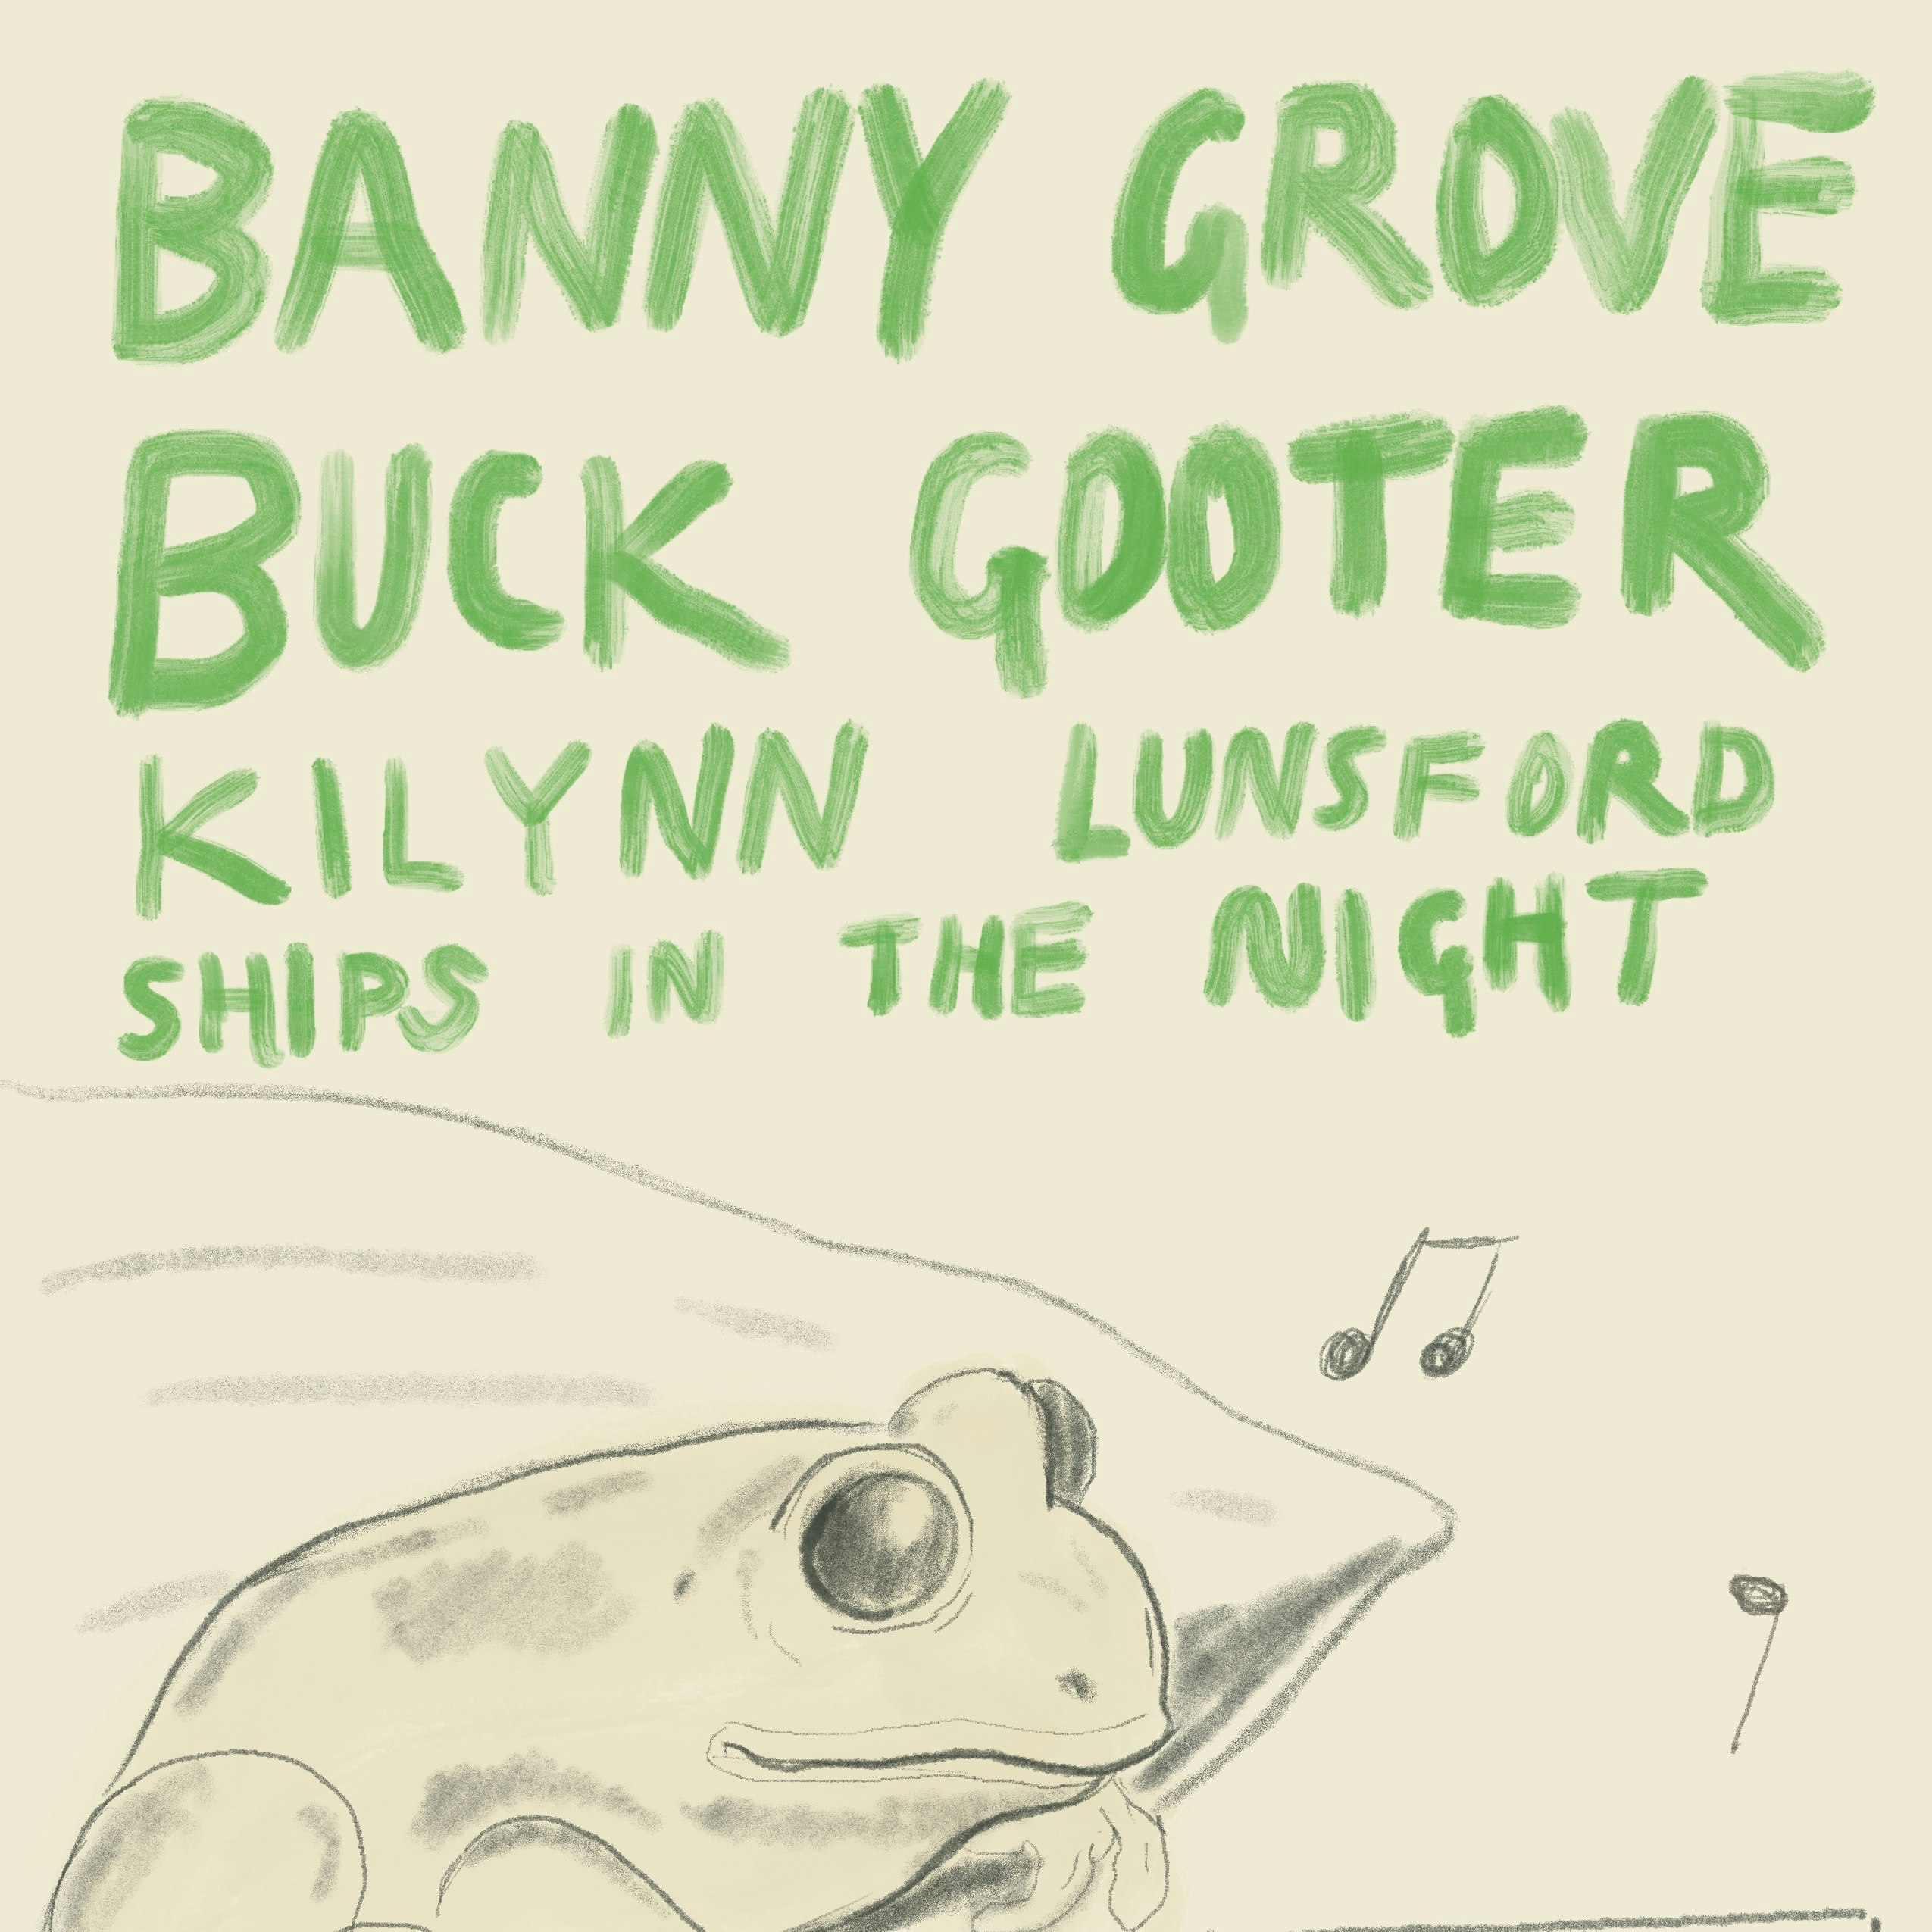 Banny Grove, Buck Gooter, Kilynn Lunsford & More